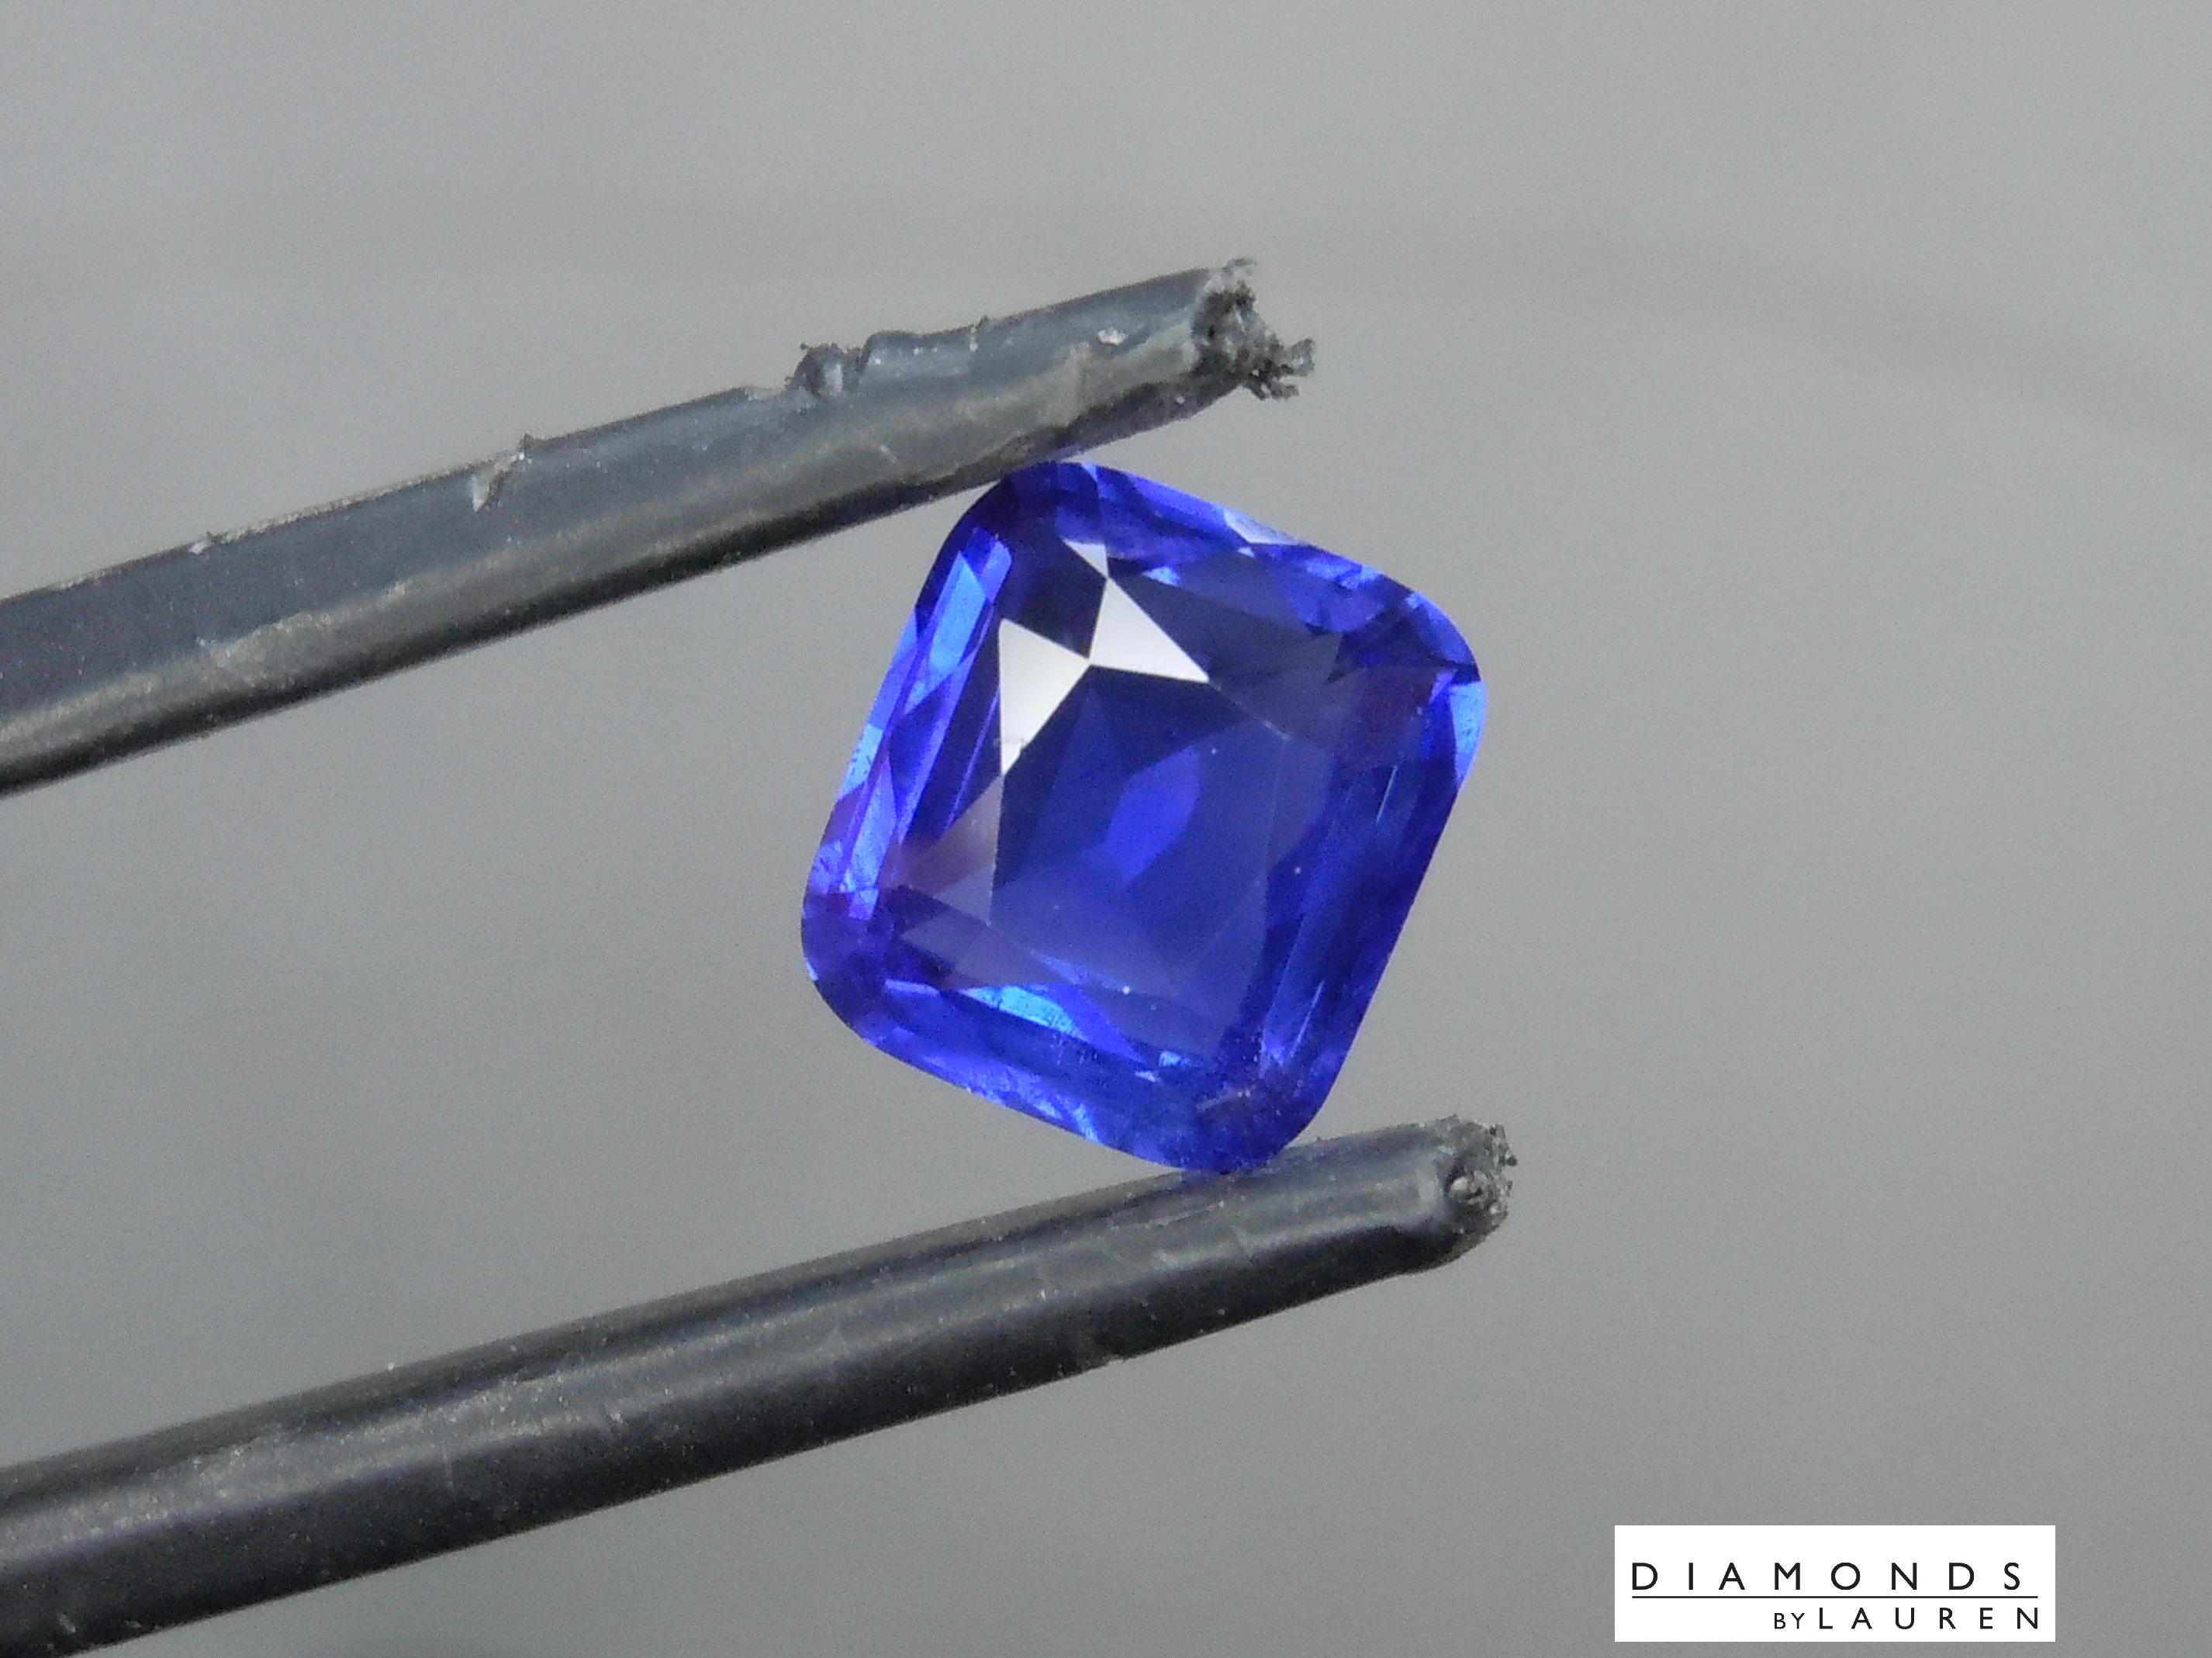 royal blue sapphire